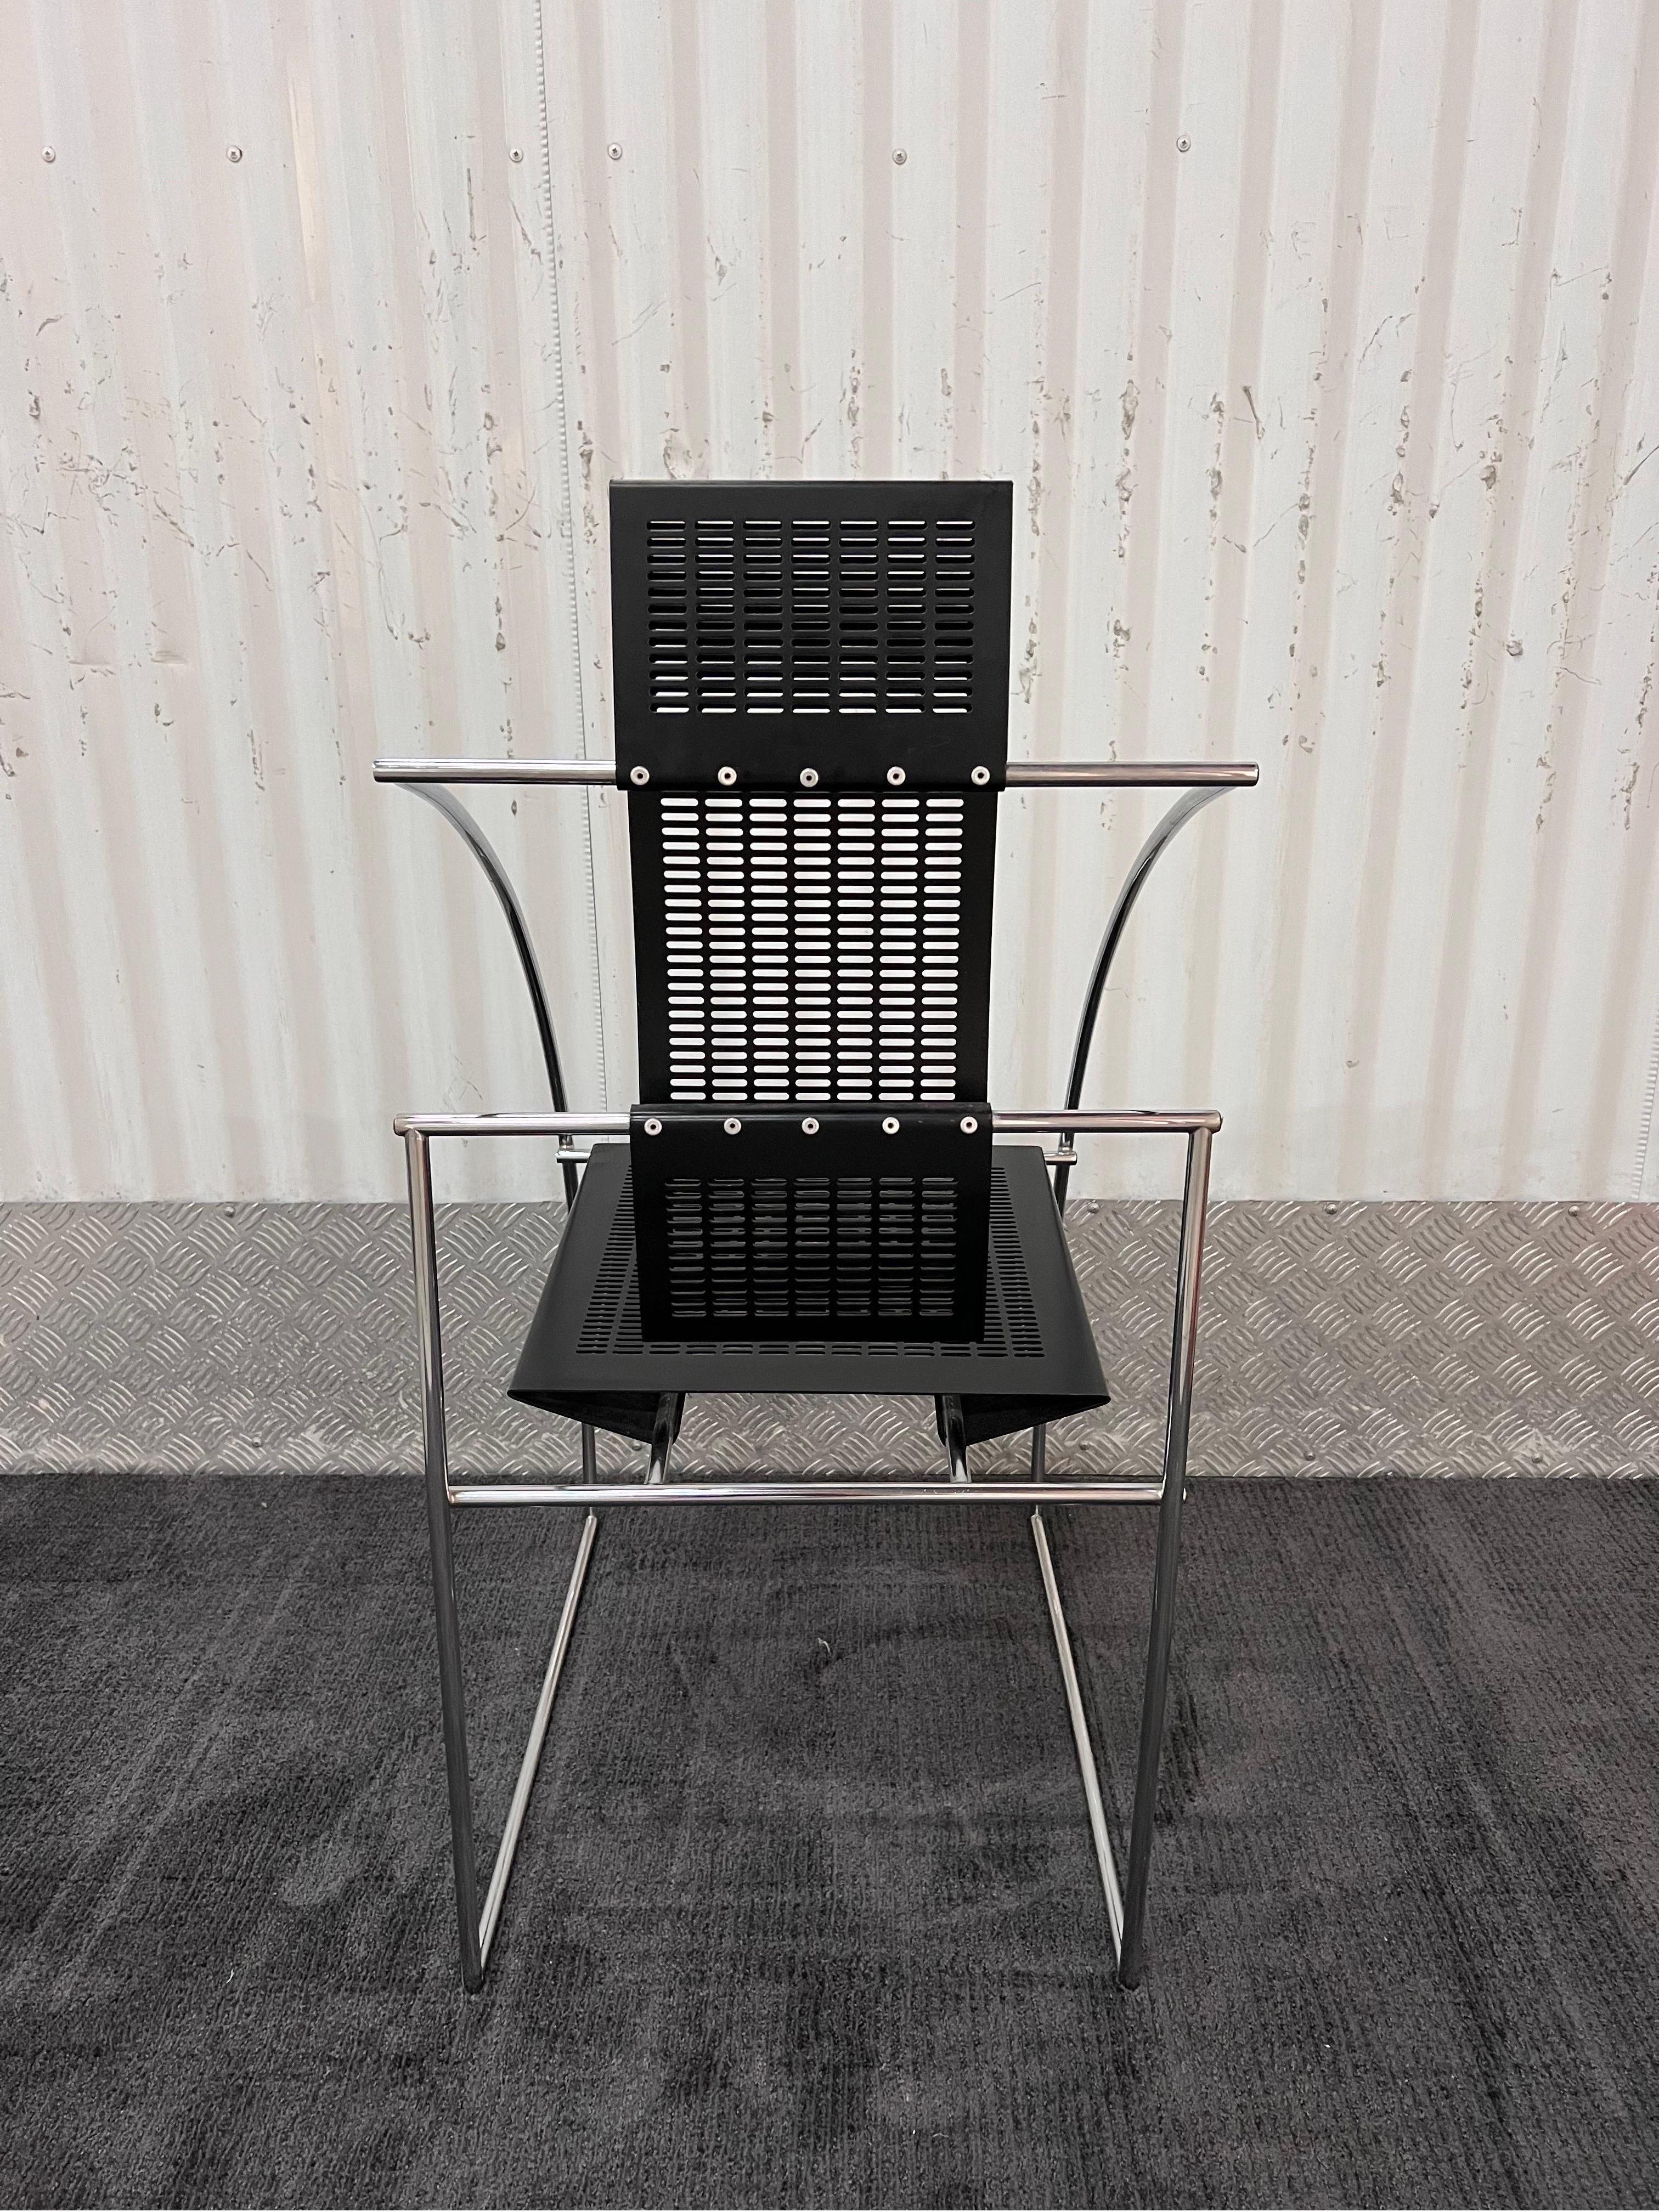 Mario Botta Quinta Chairs for Alias, a Pair For Sale 2